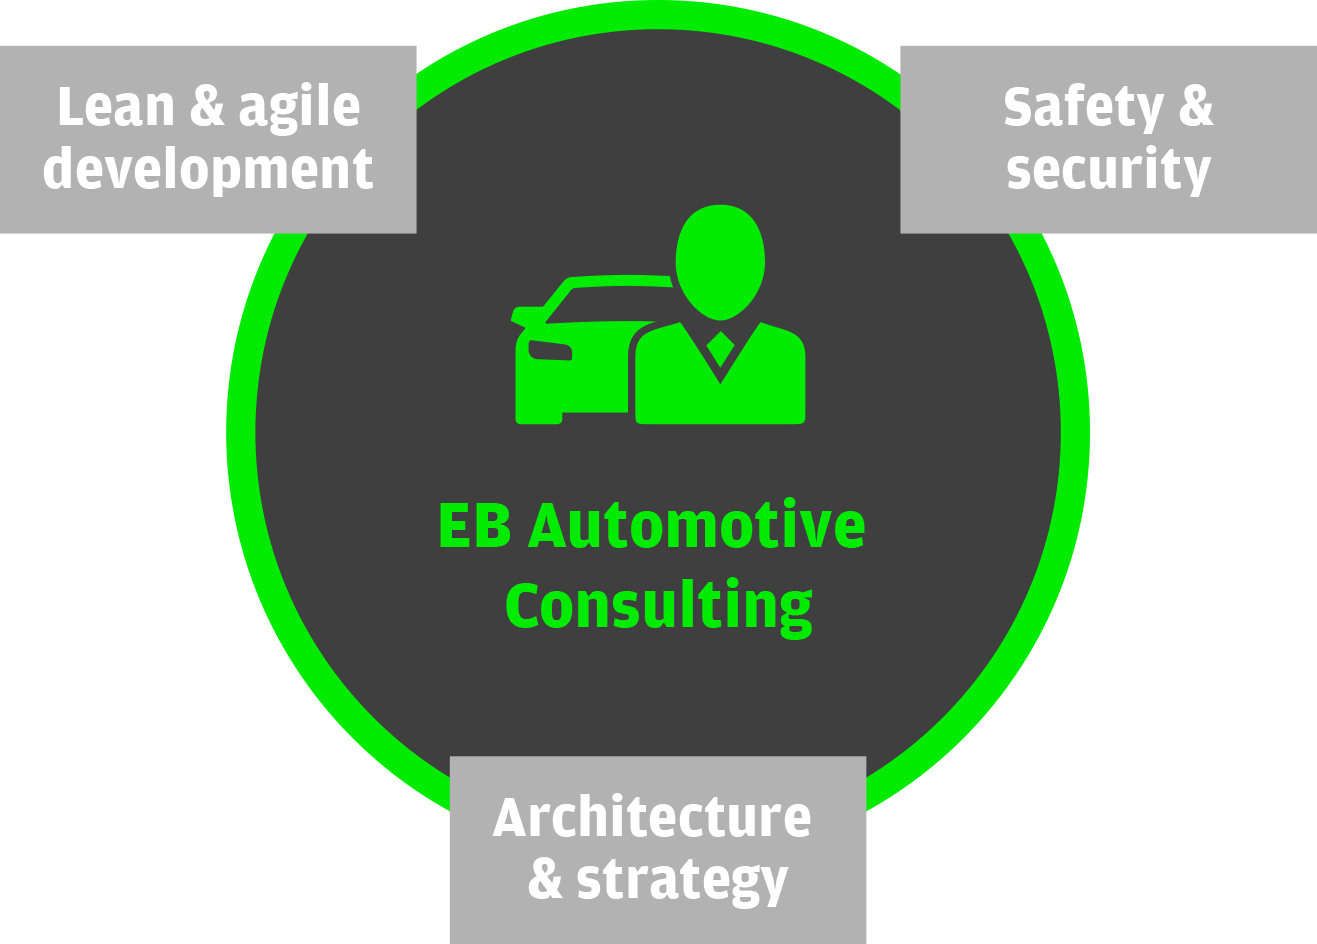 EB Automotive Consulting